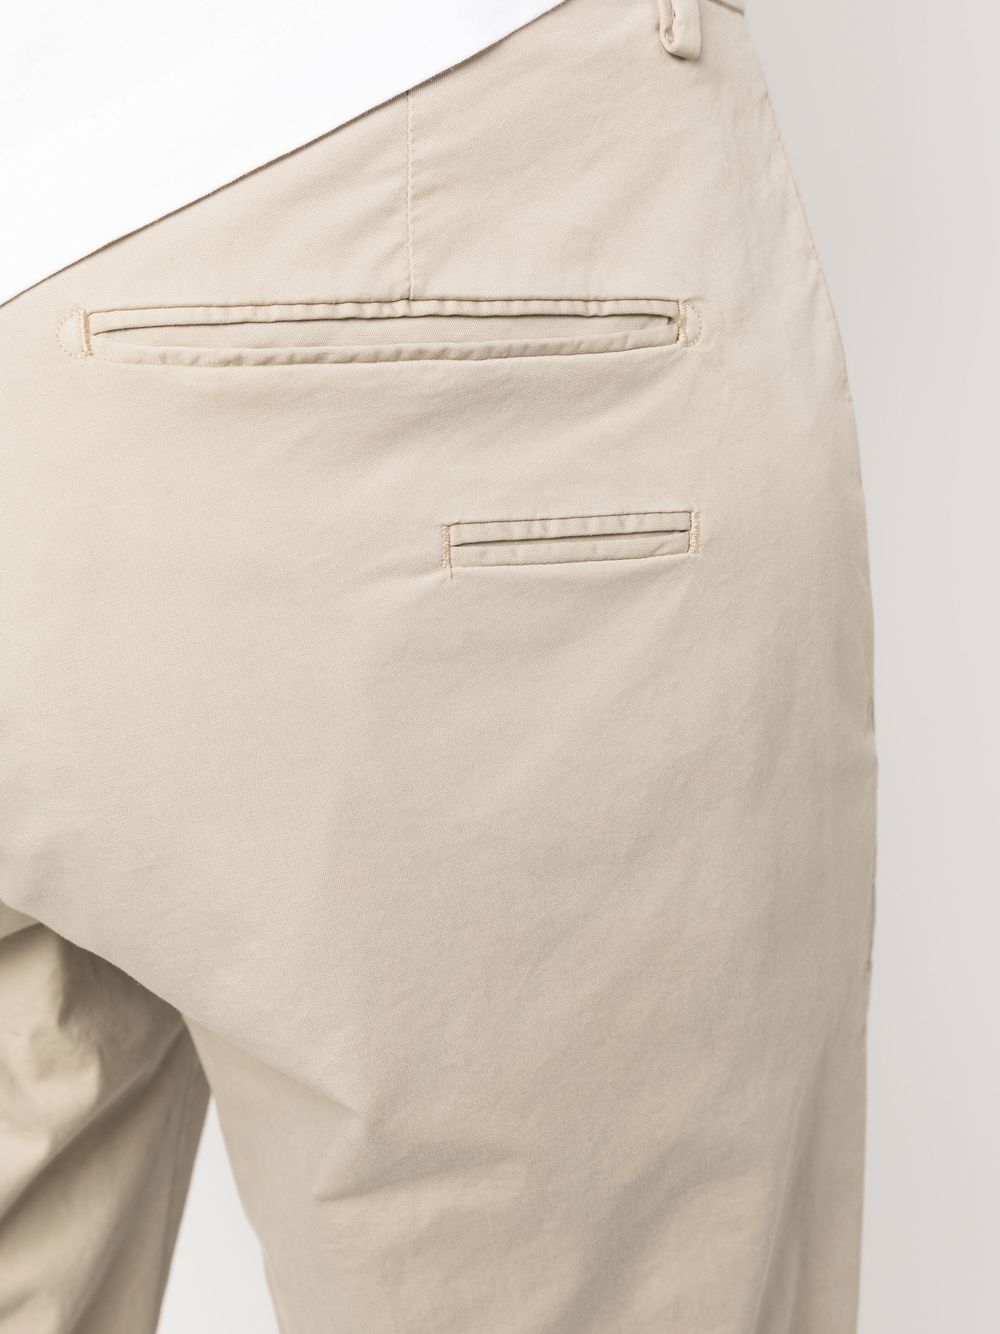 Pantalone in cotone beige